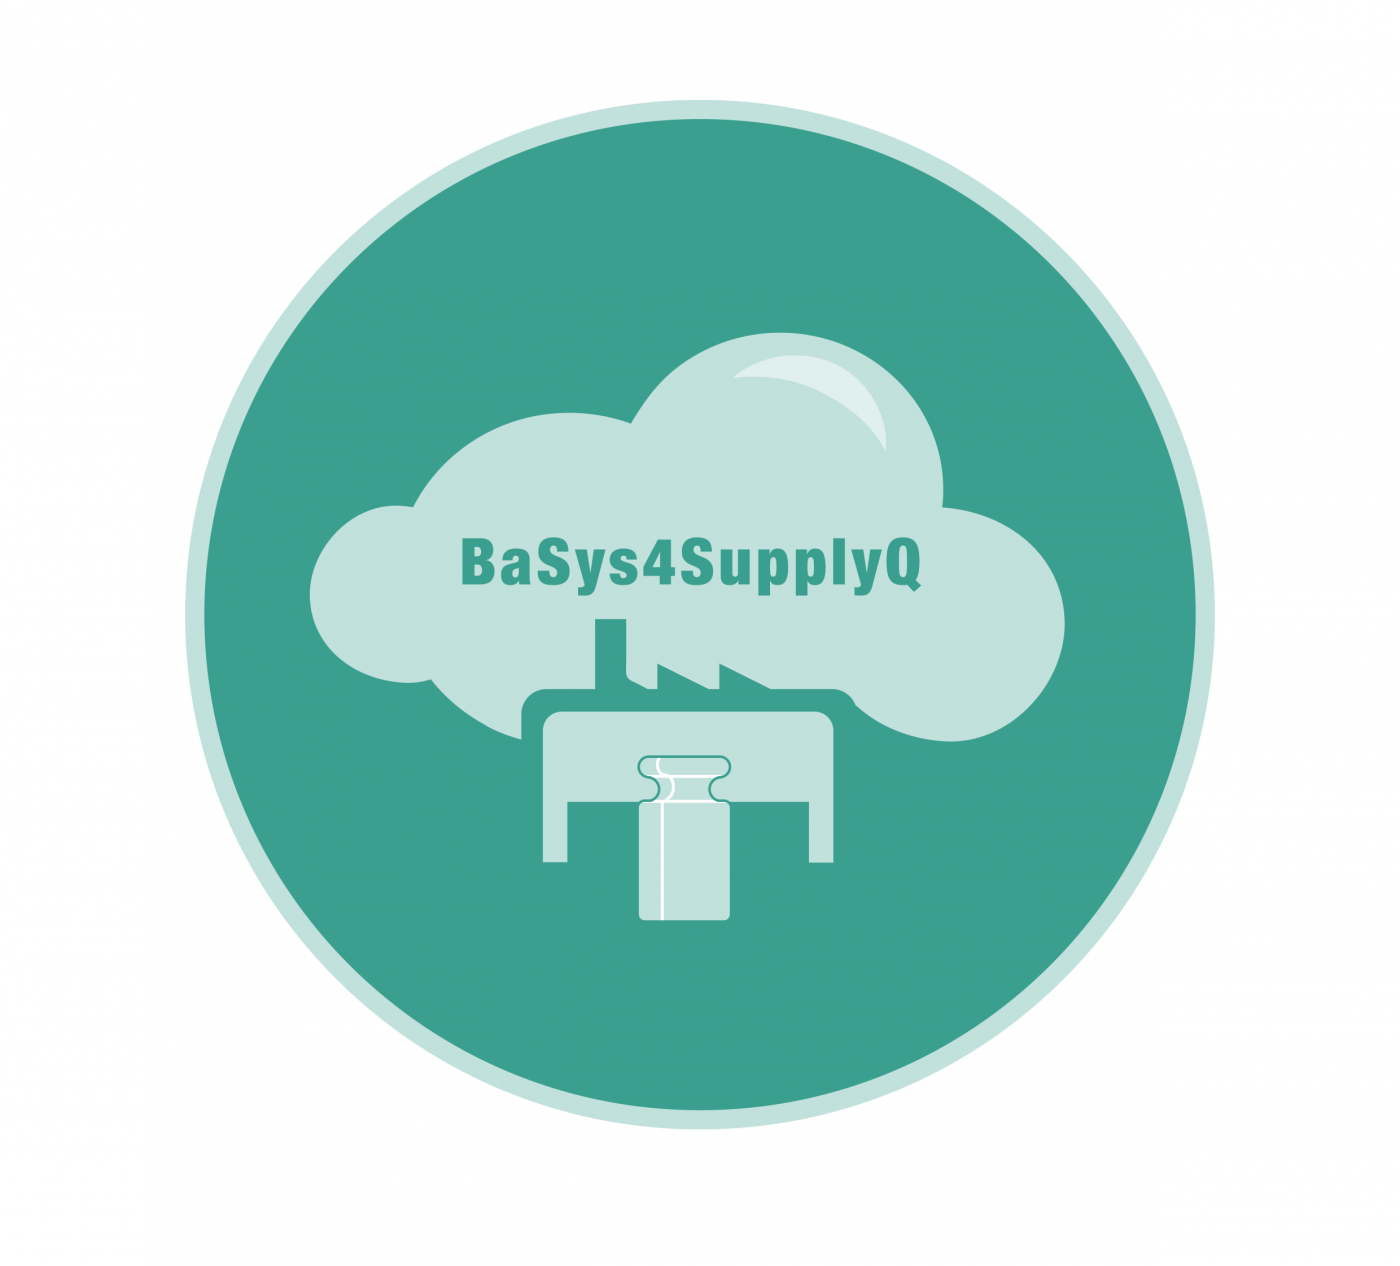 BaSys4SupplyQ